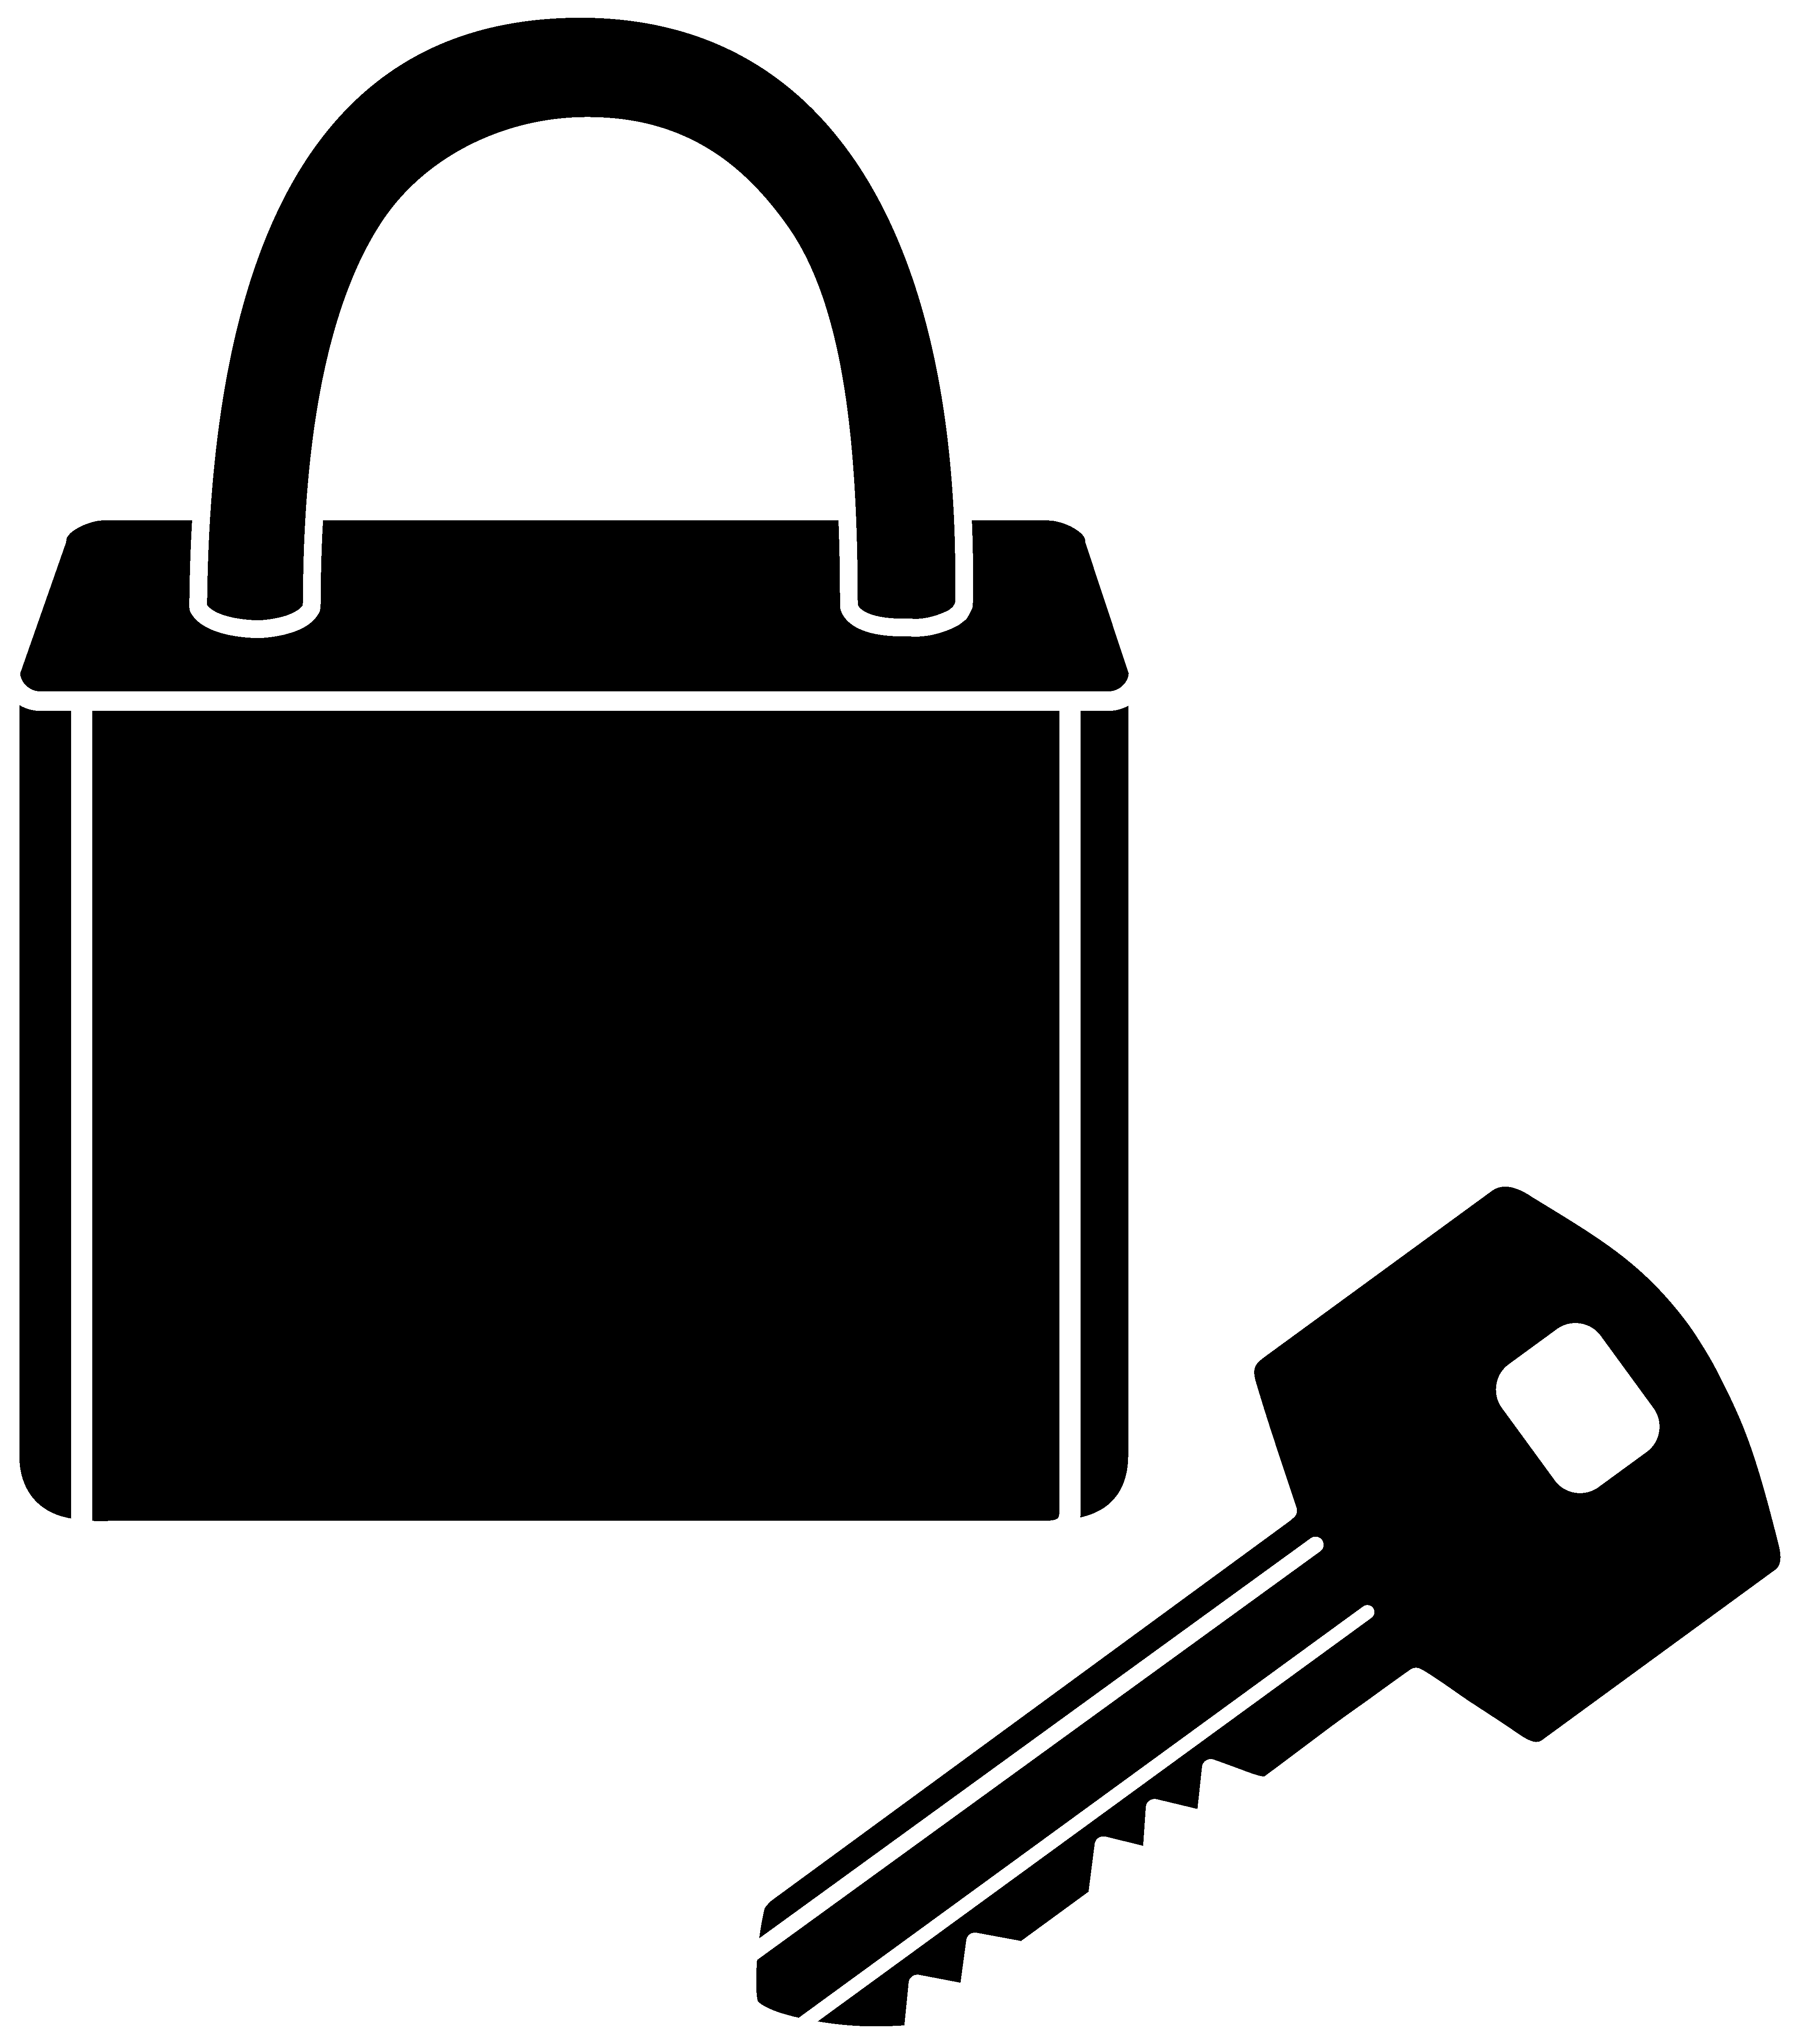 Key in lock clipart